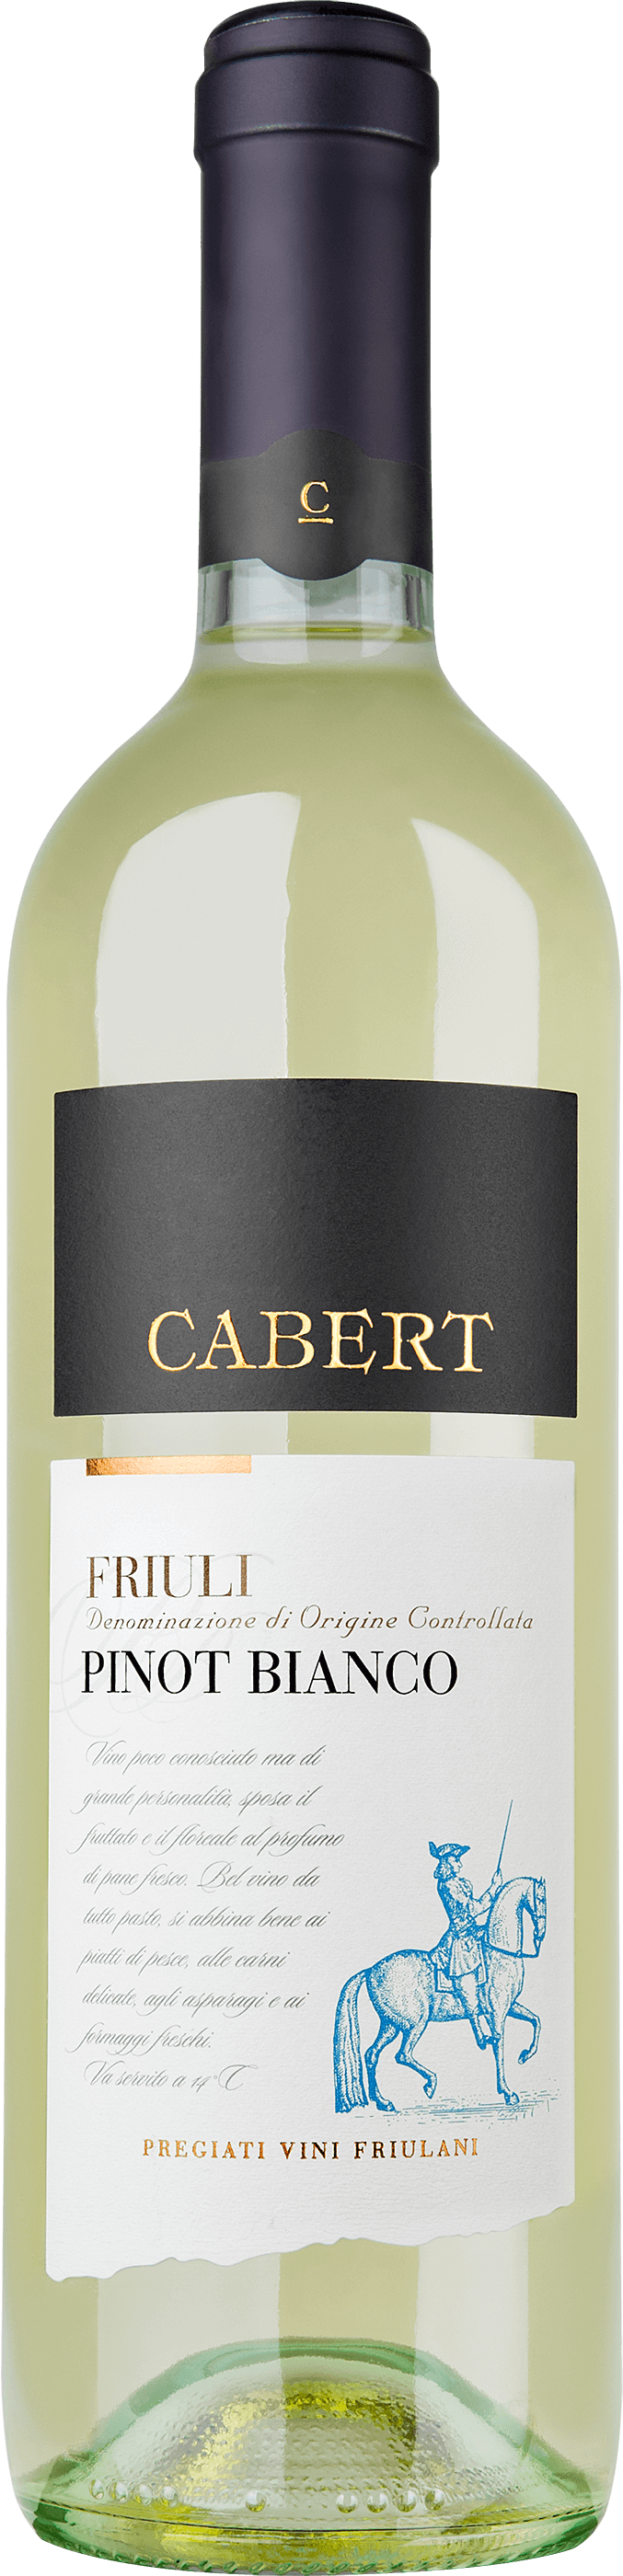 Pinot Bianco Friuli Grave Doc - Cabert - Vino Friuli Venezia Giulia